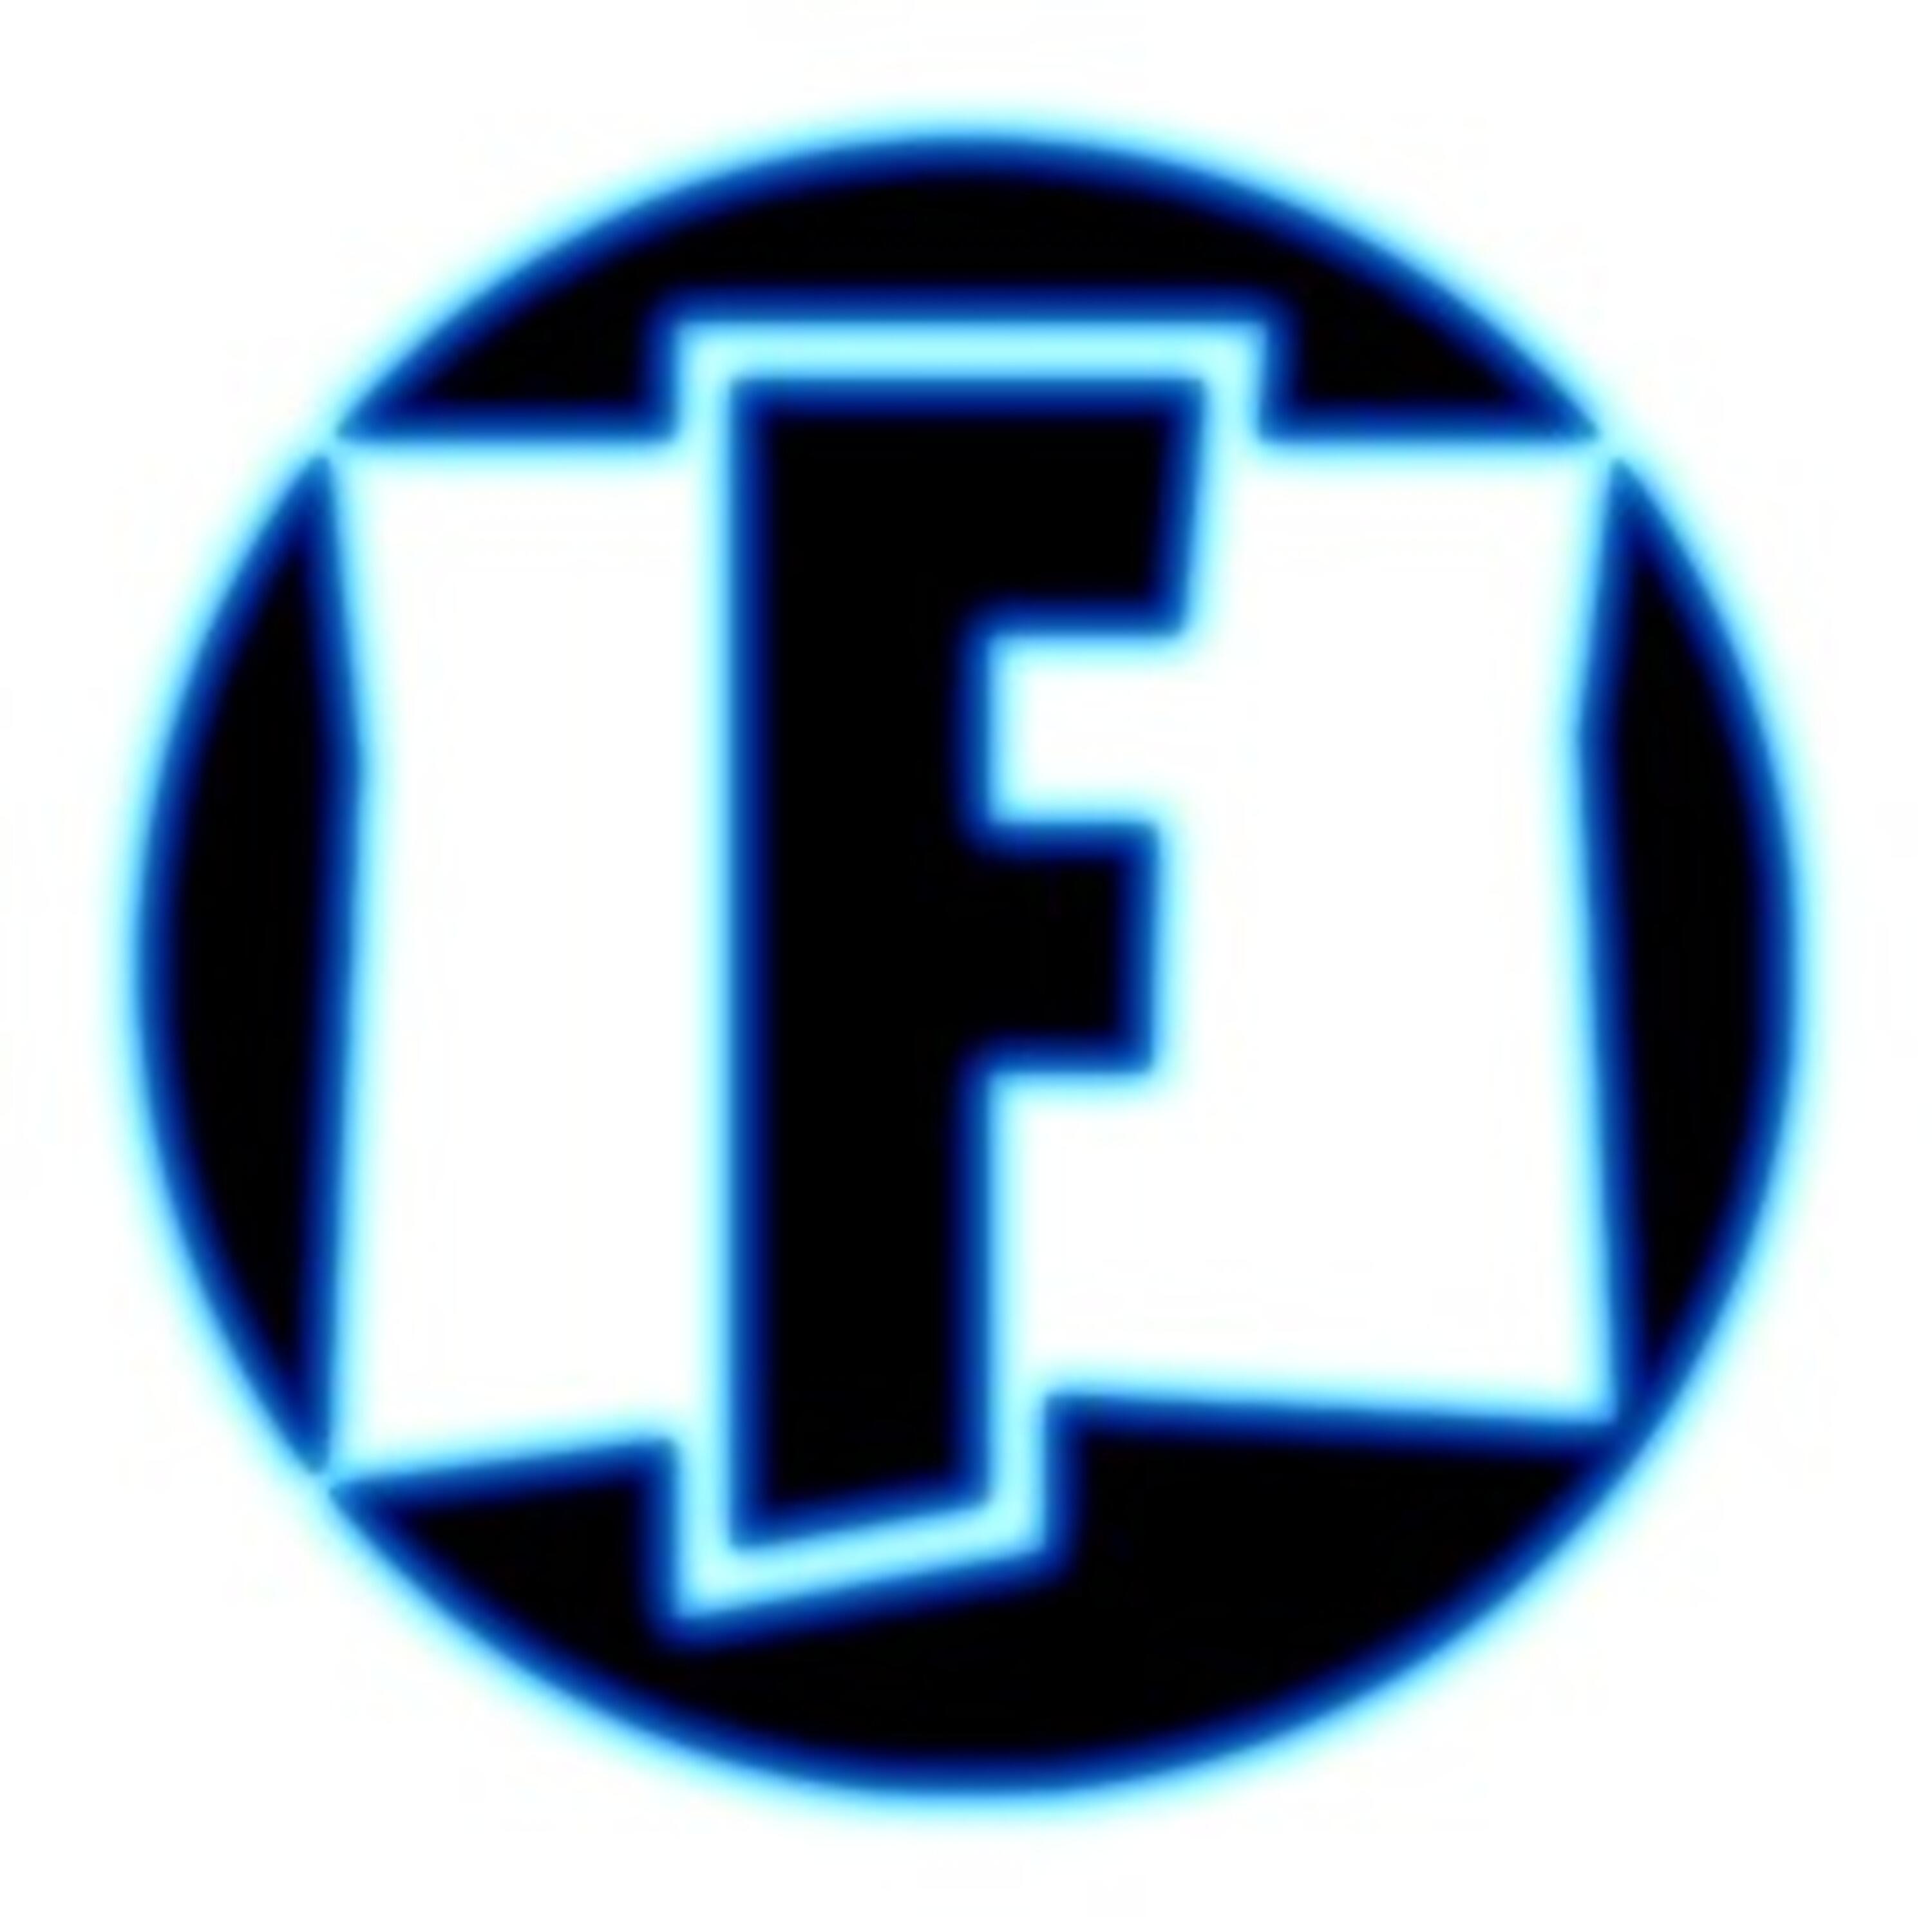 S1e3 Fortnite Vs Roblox Fortnite Podcast Iheartradio - what is better roblox or fortnite